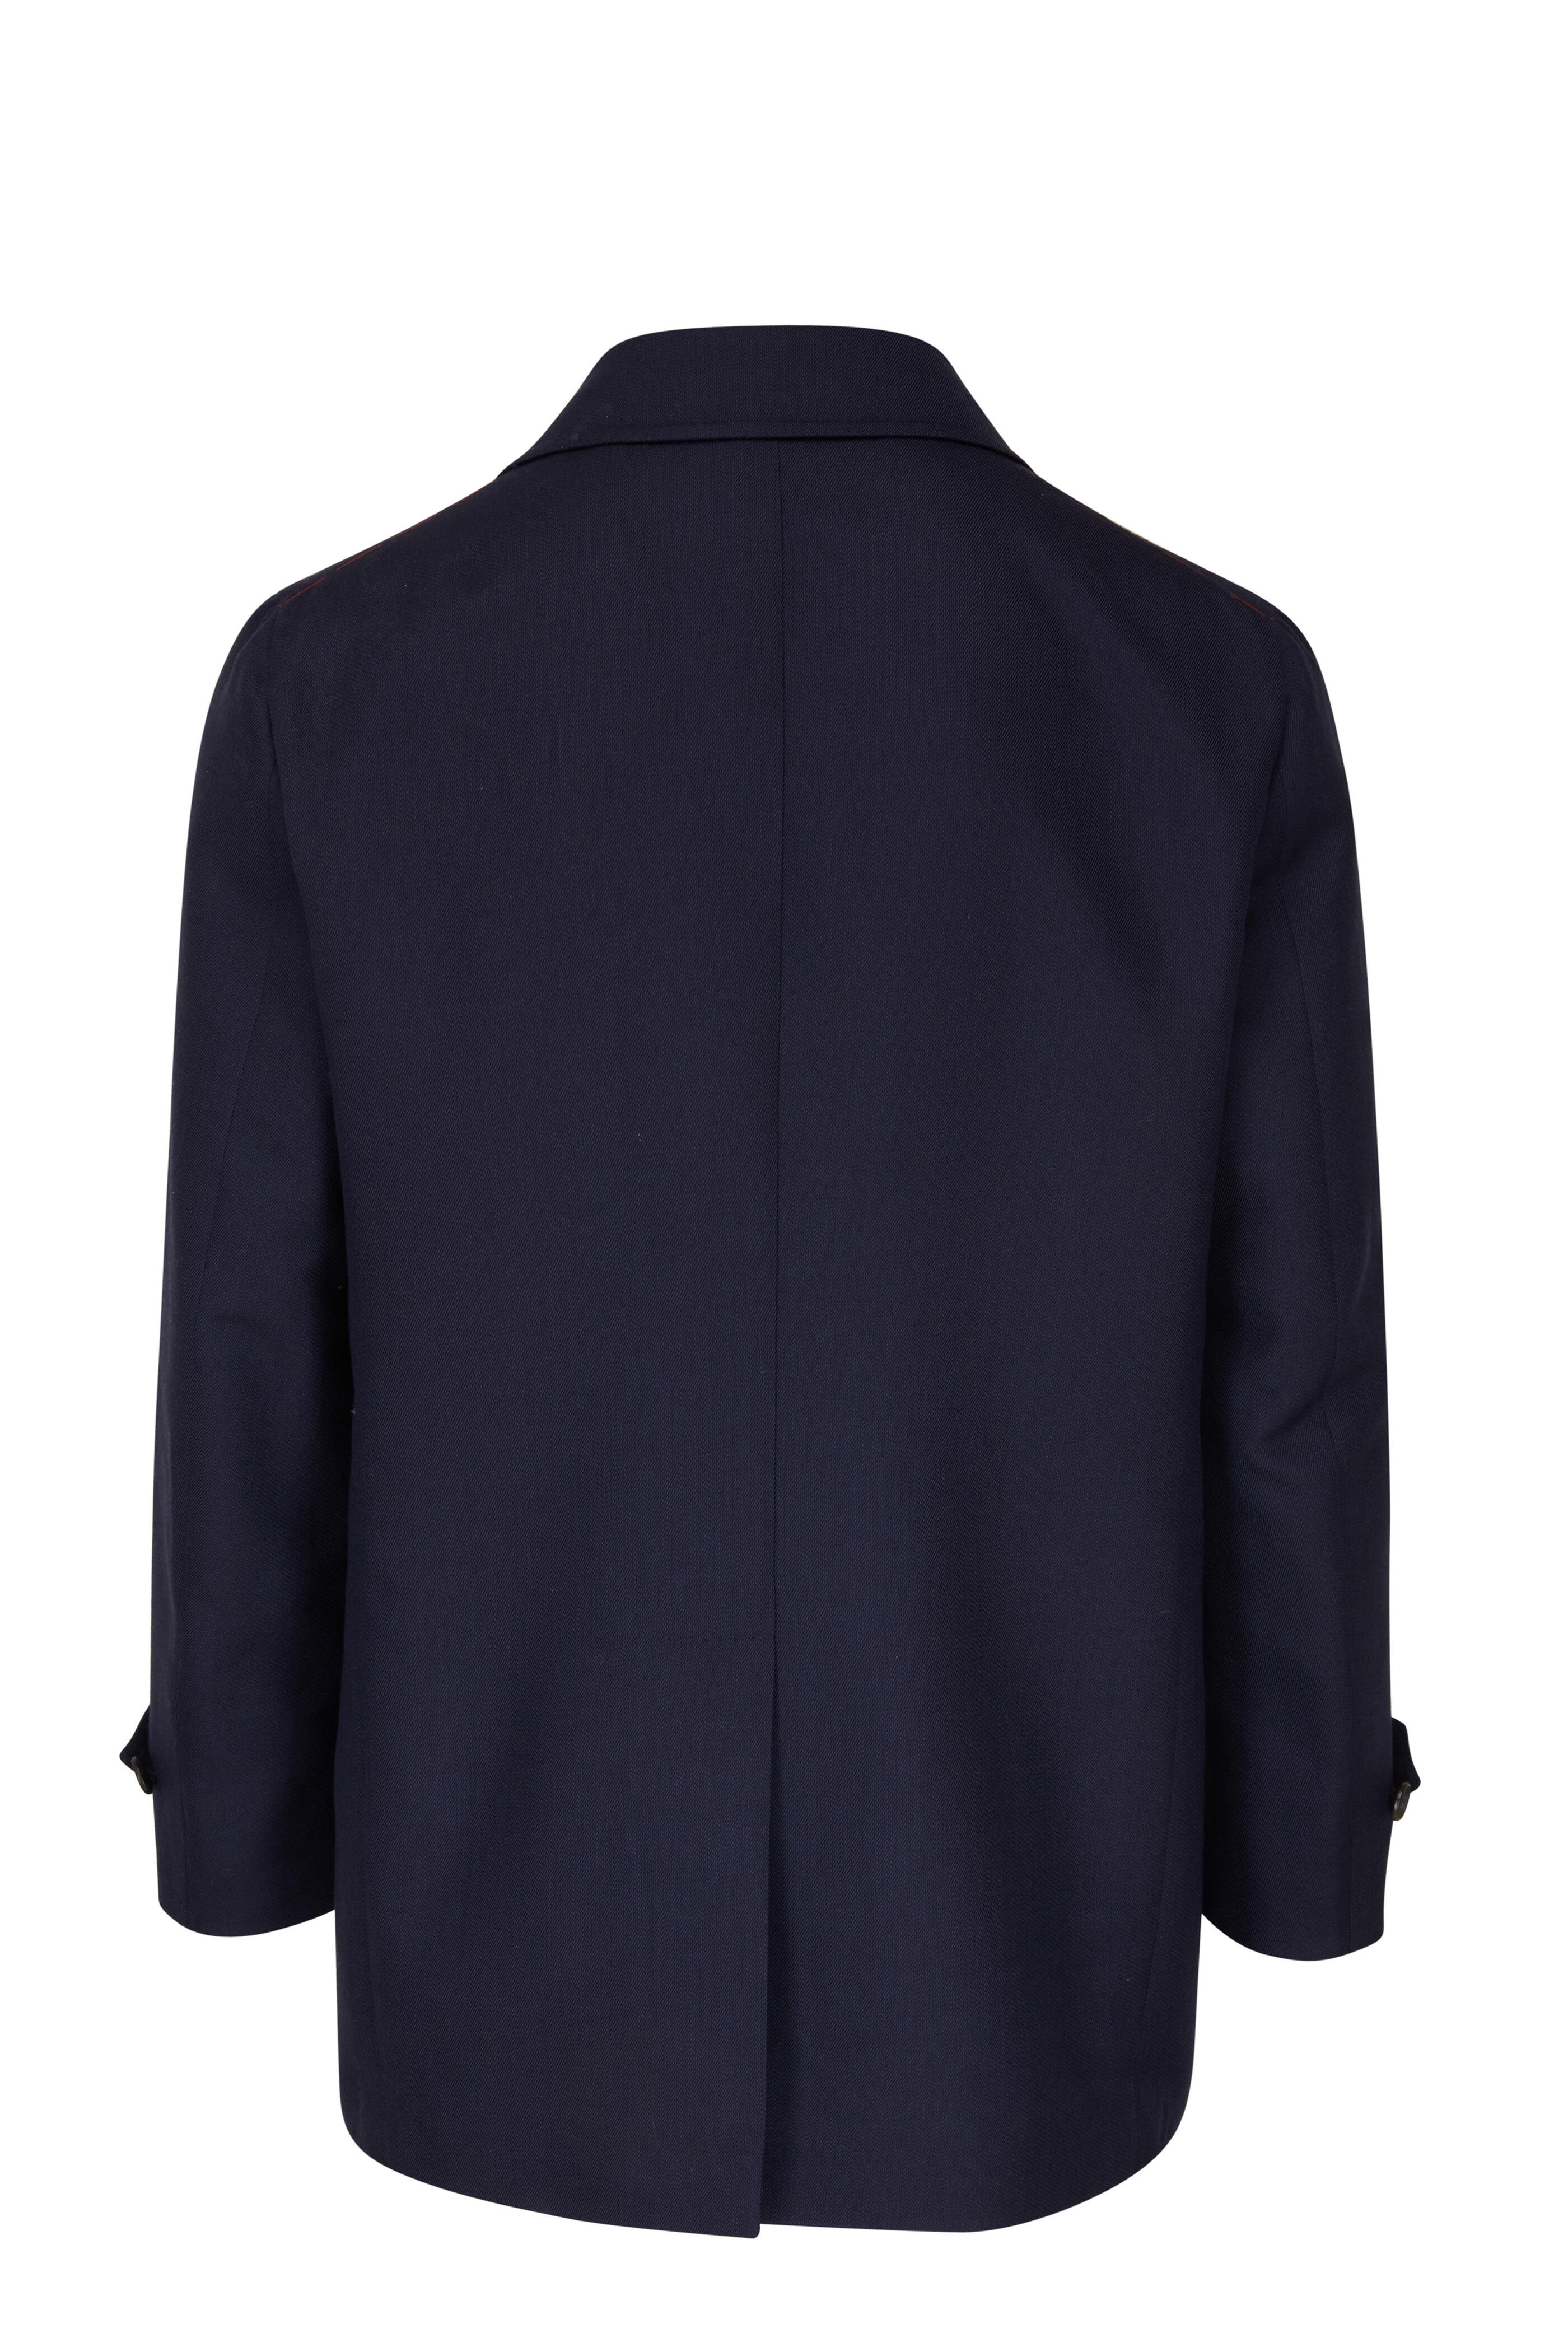 Isaia - Navy Aqua Wool & Cashmere Walking Coat | Mitchell Stores